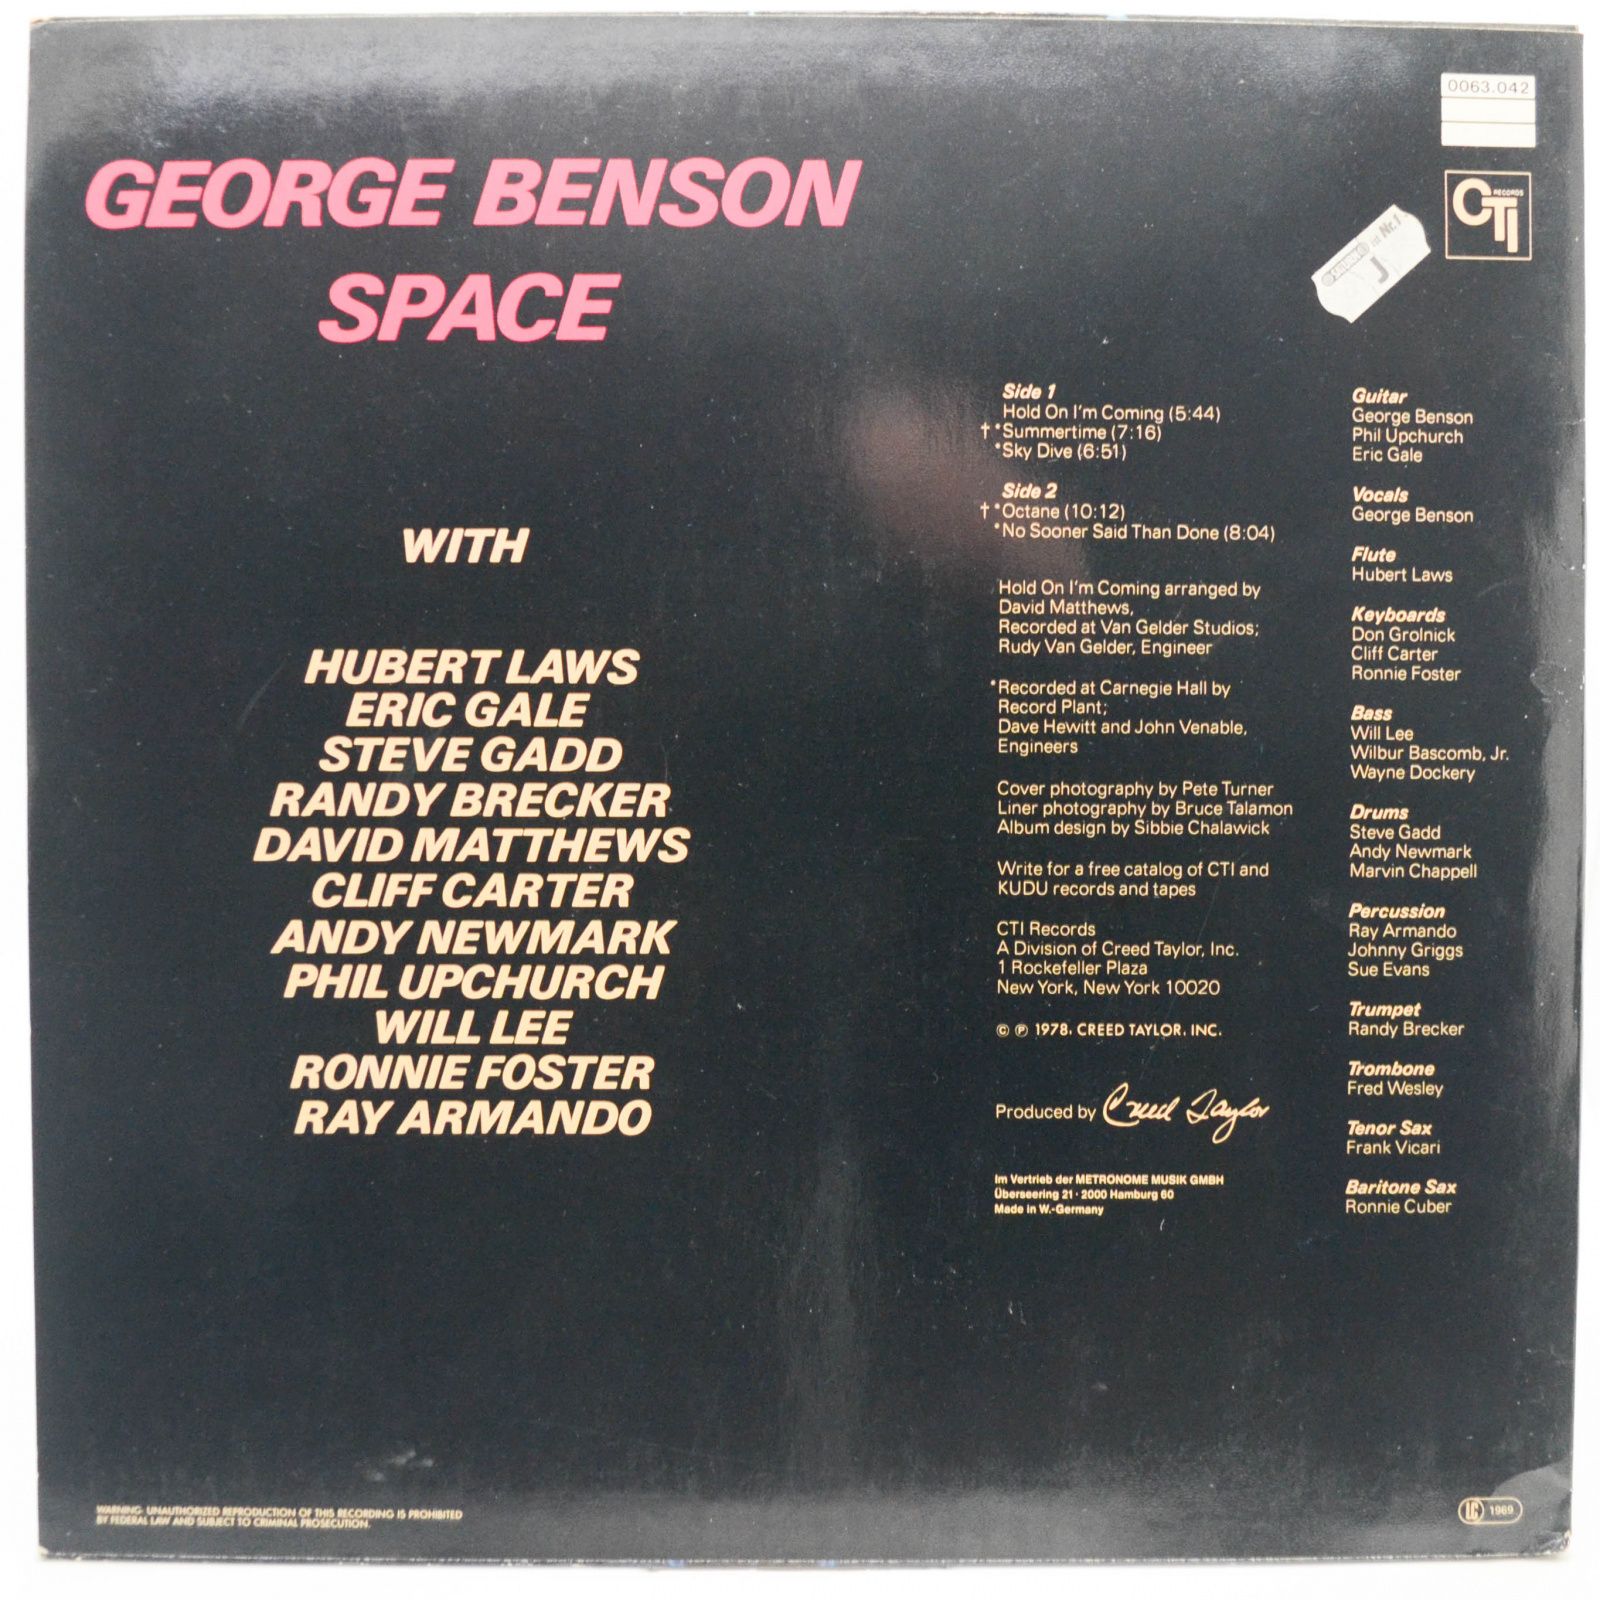 George Benson — Space, 1978